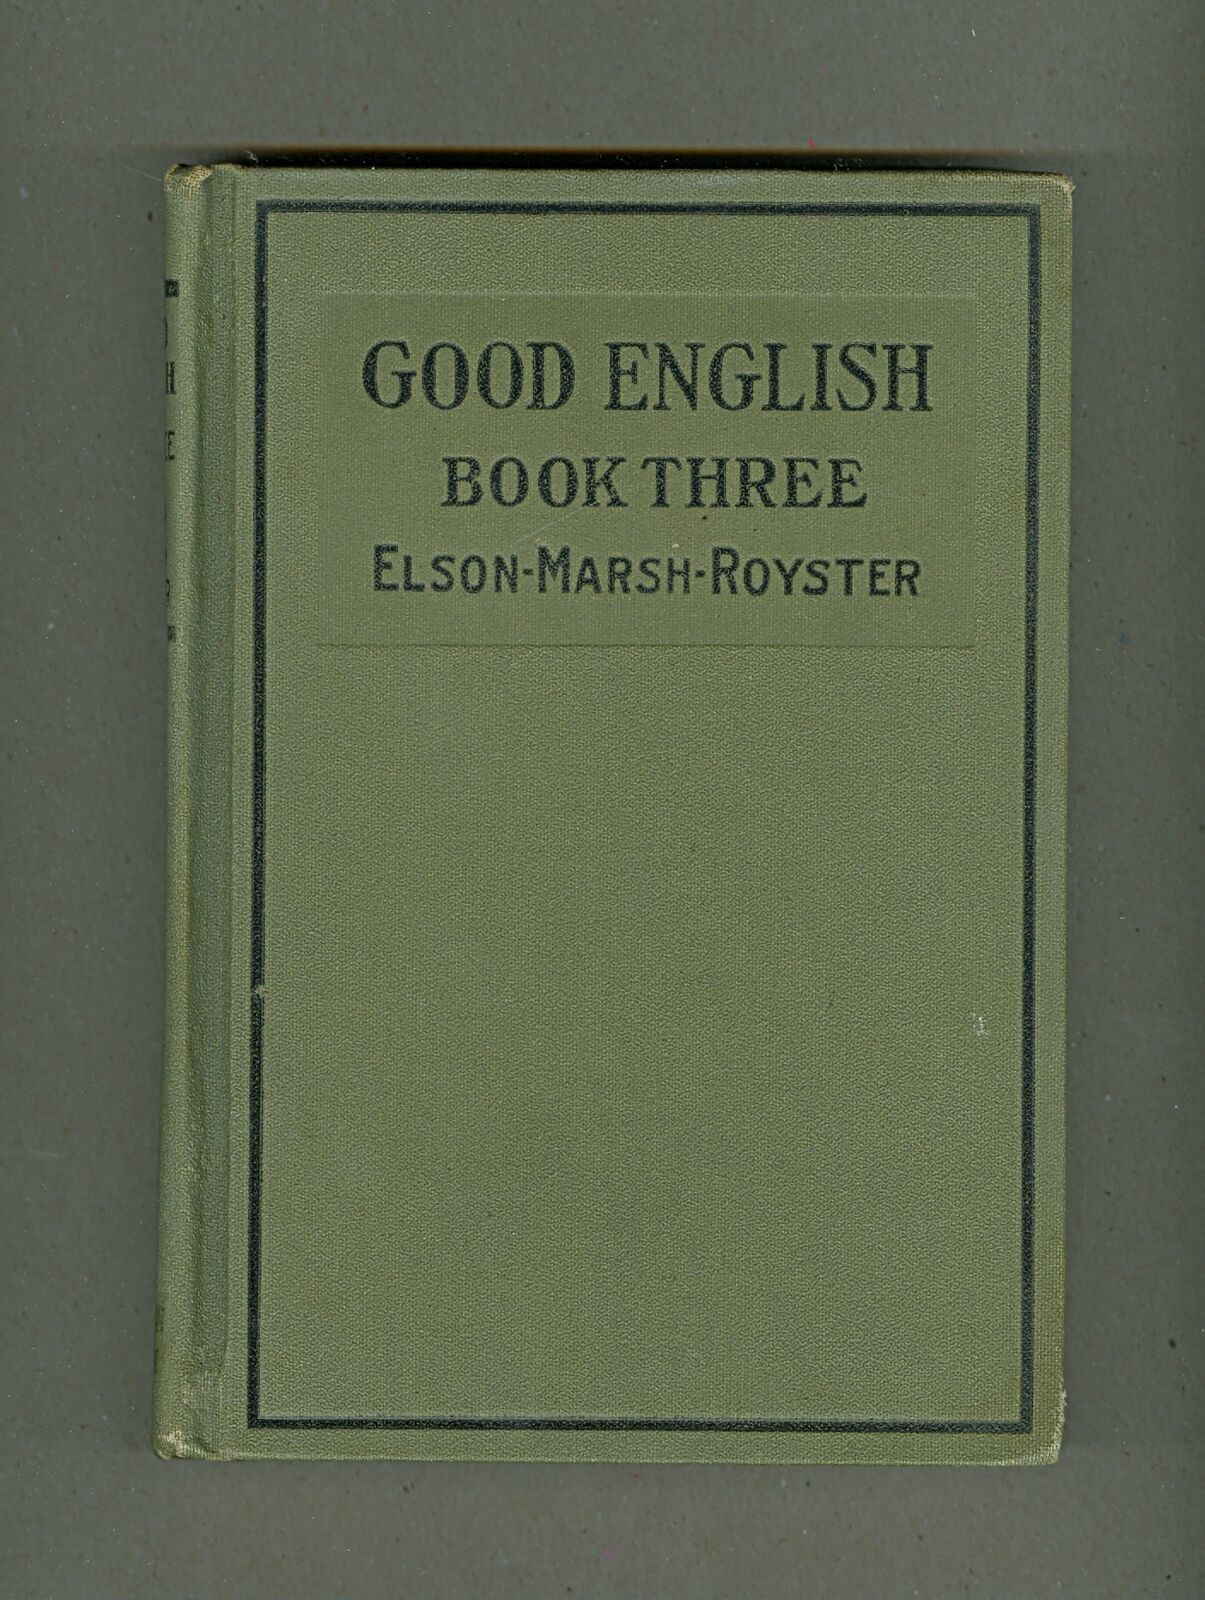 Good English Book Three 1921 FN/VF 7.0